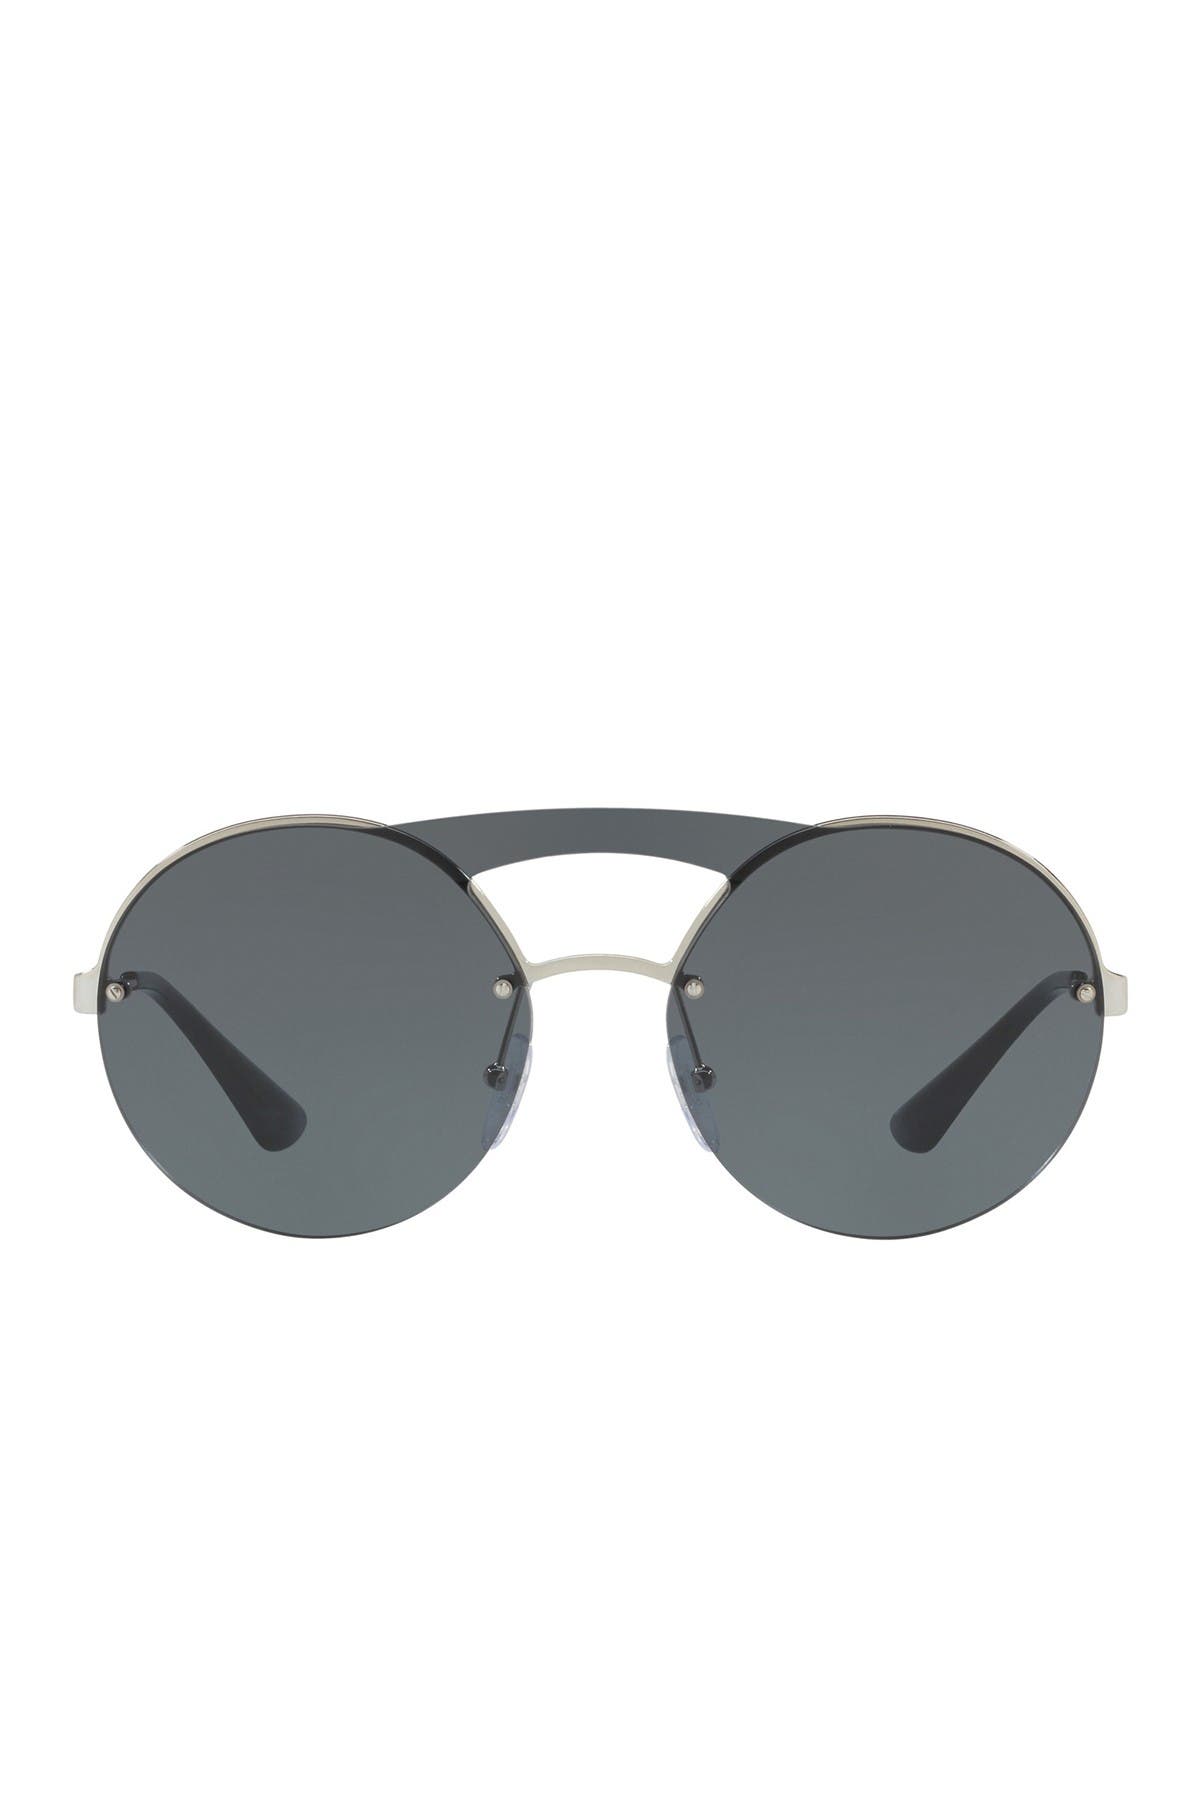 prada 36mm round sunglasses